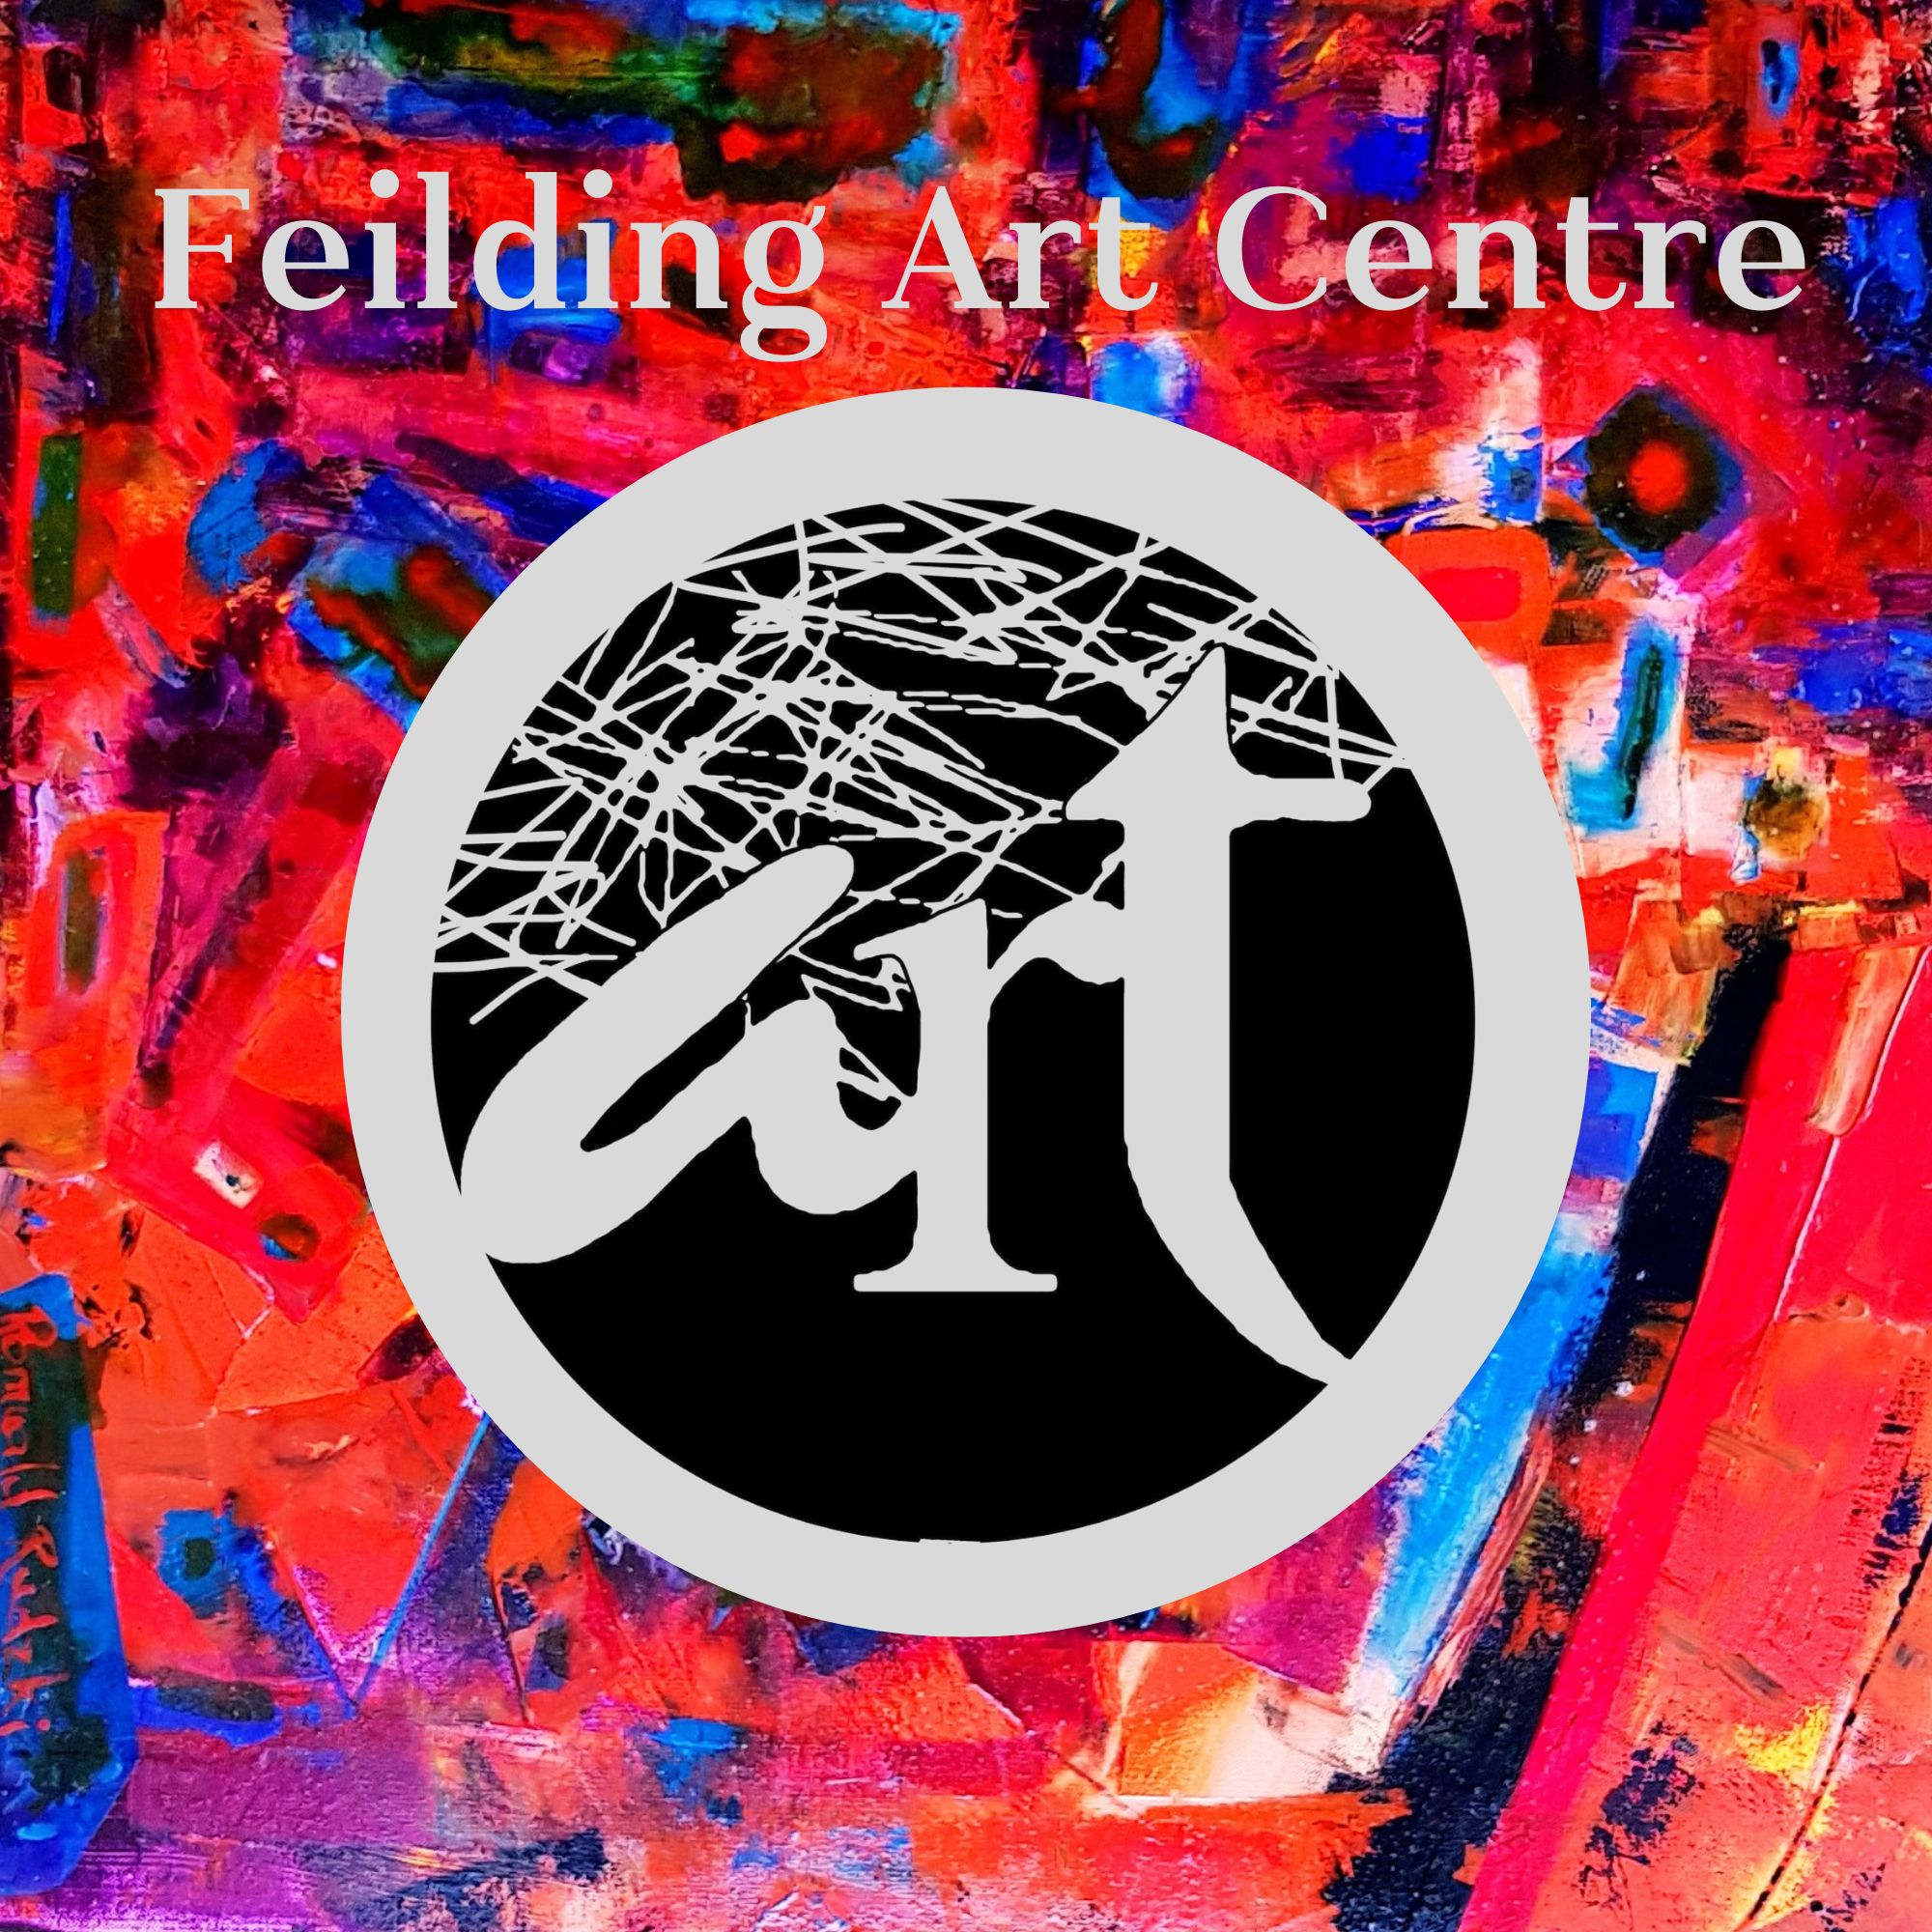 Feilding Art Centre